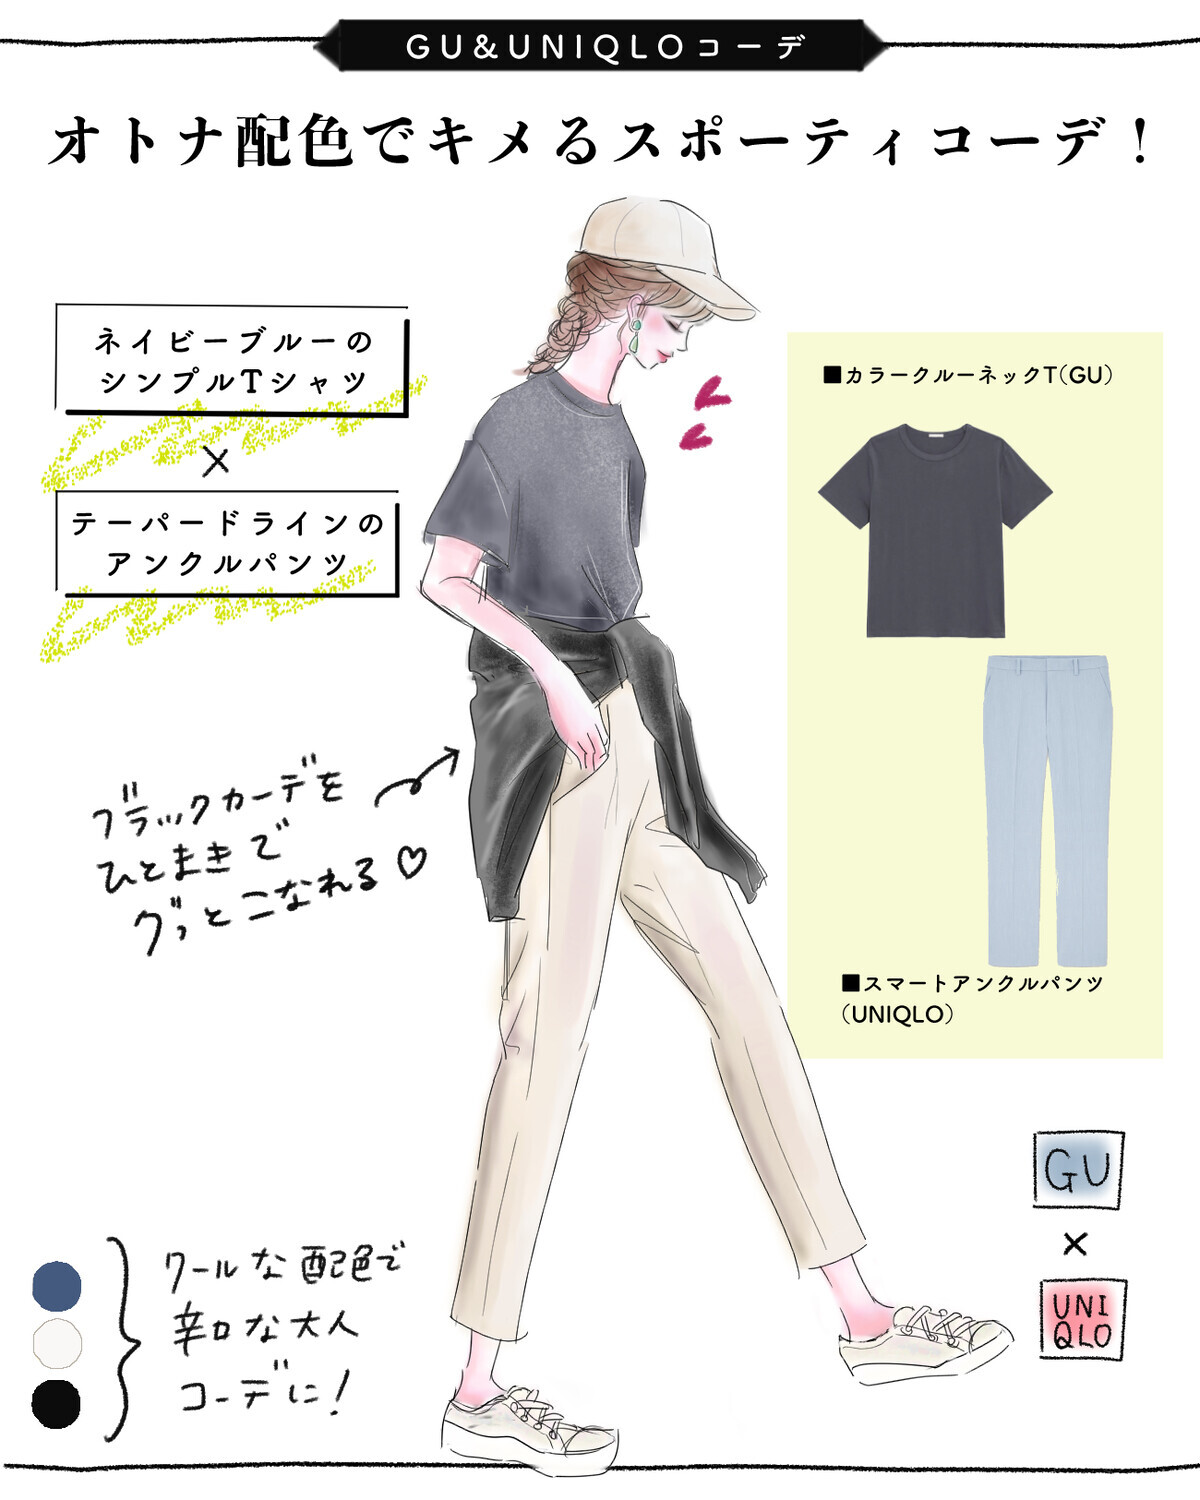 【GU590円Tシャツ】手抜きに見えない♪この夏、Tシャツコーデをアップデート！